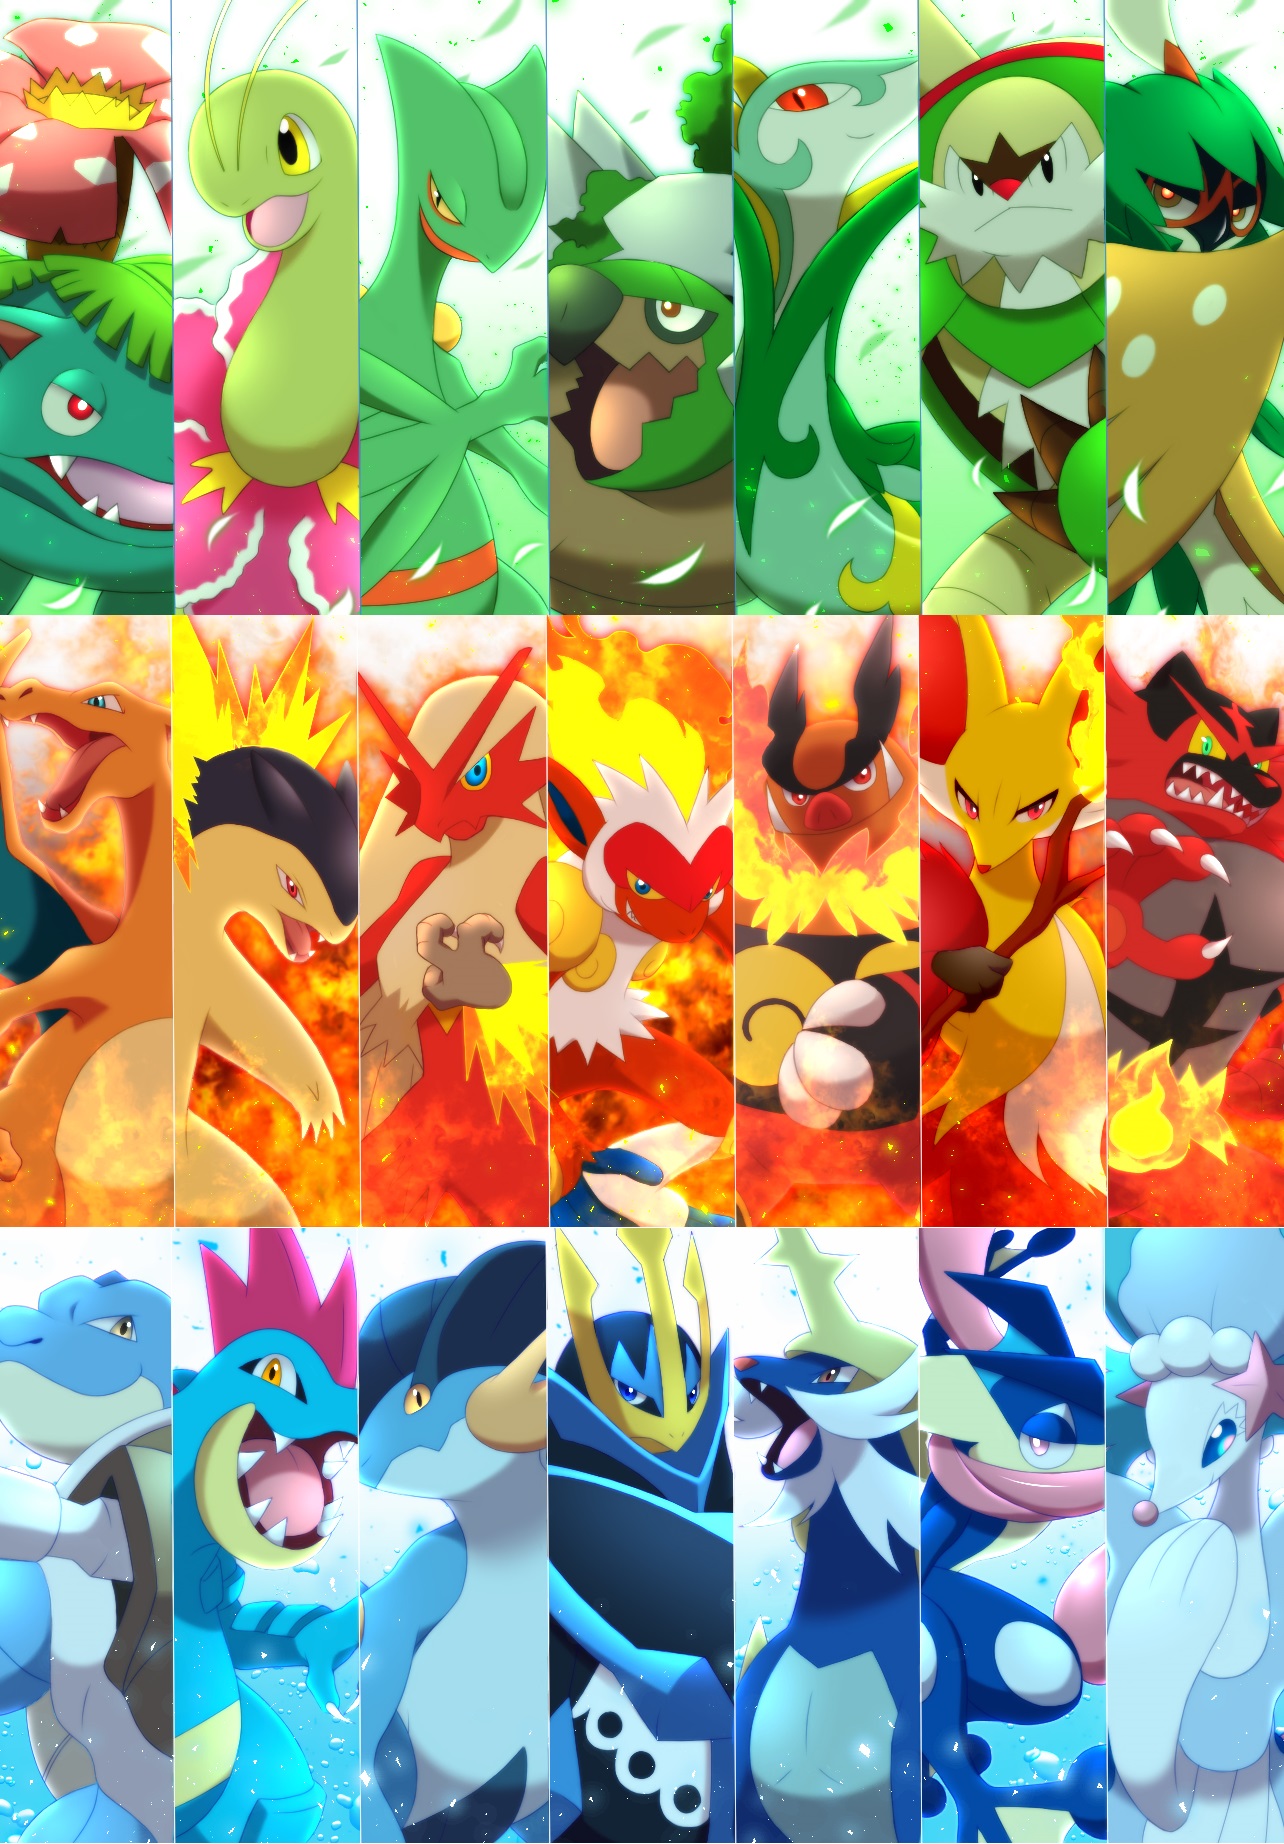 Starters - Pokemon heroes